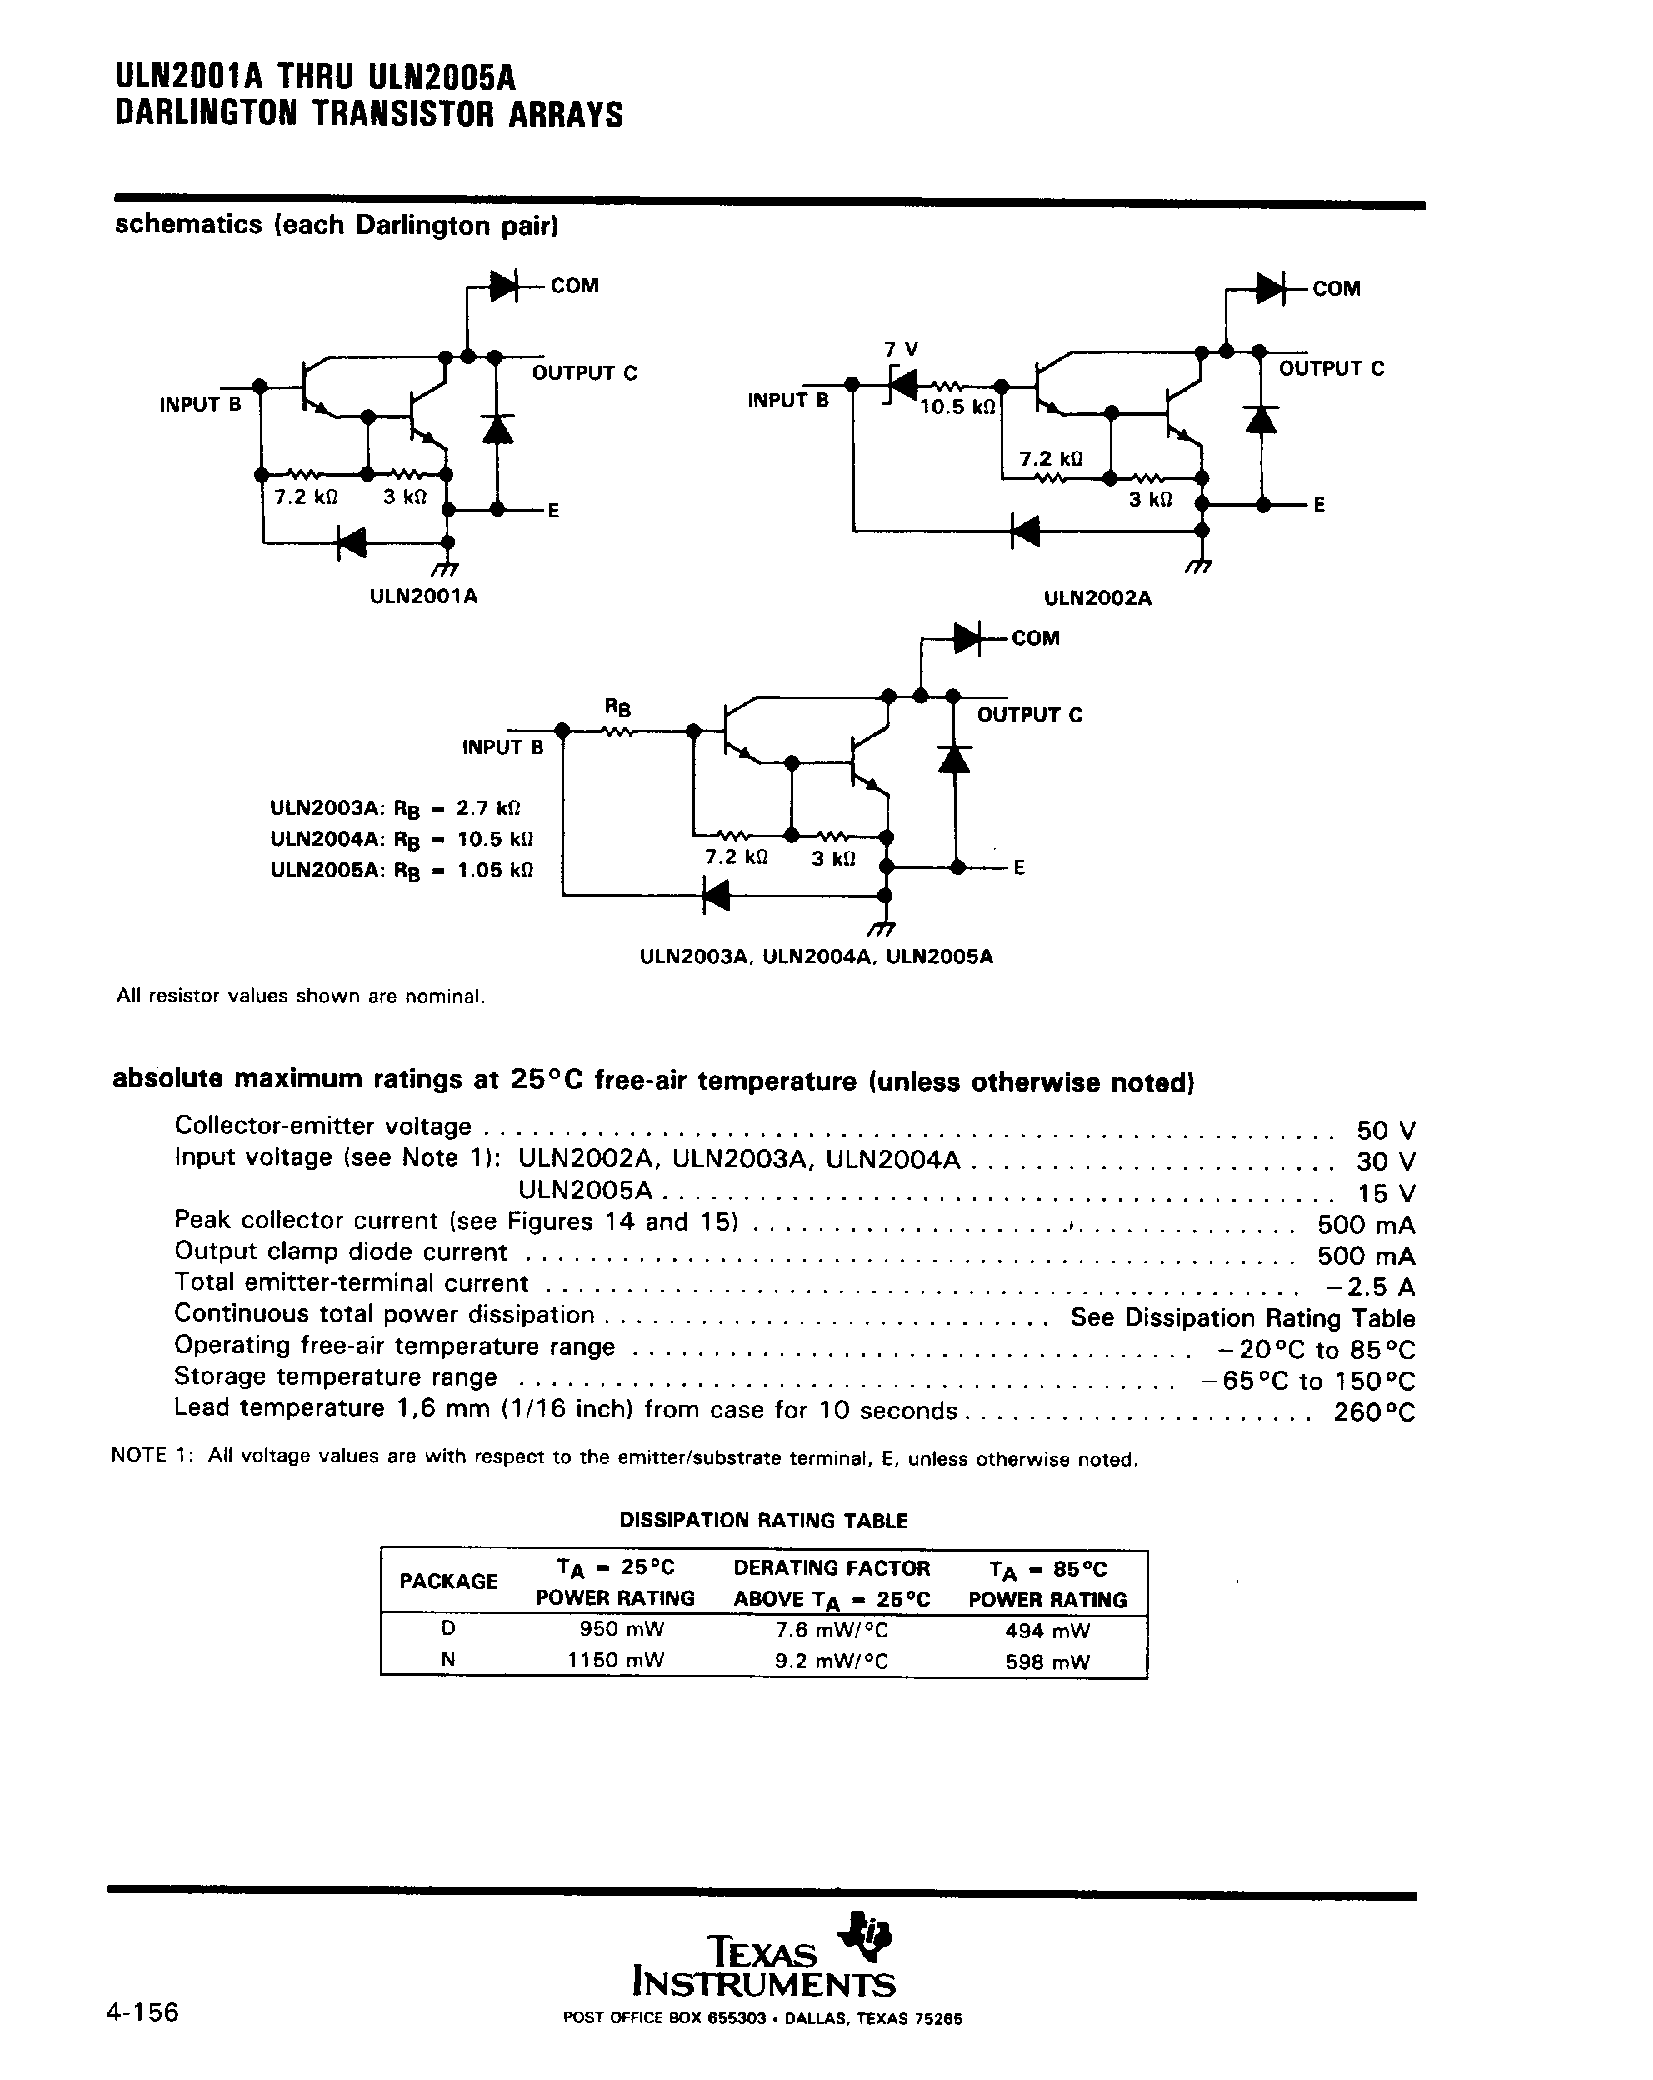 Datasheet ULN2005A - (ULN2001A - ULN2005A) Darlington Transistor Arrays page 2